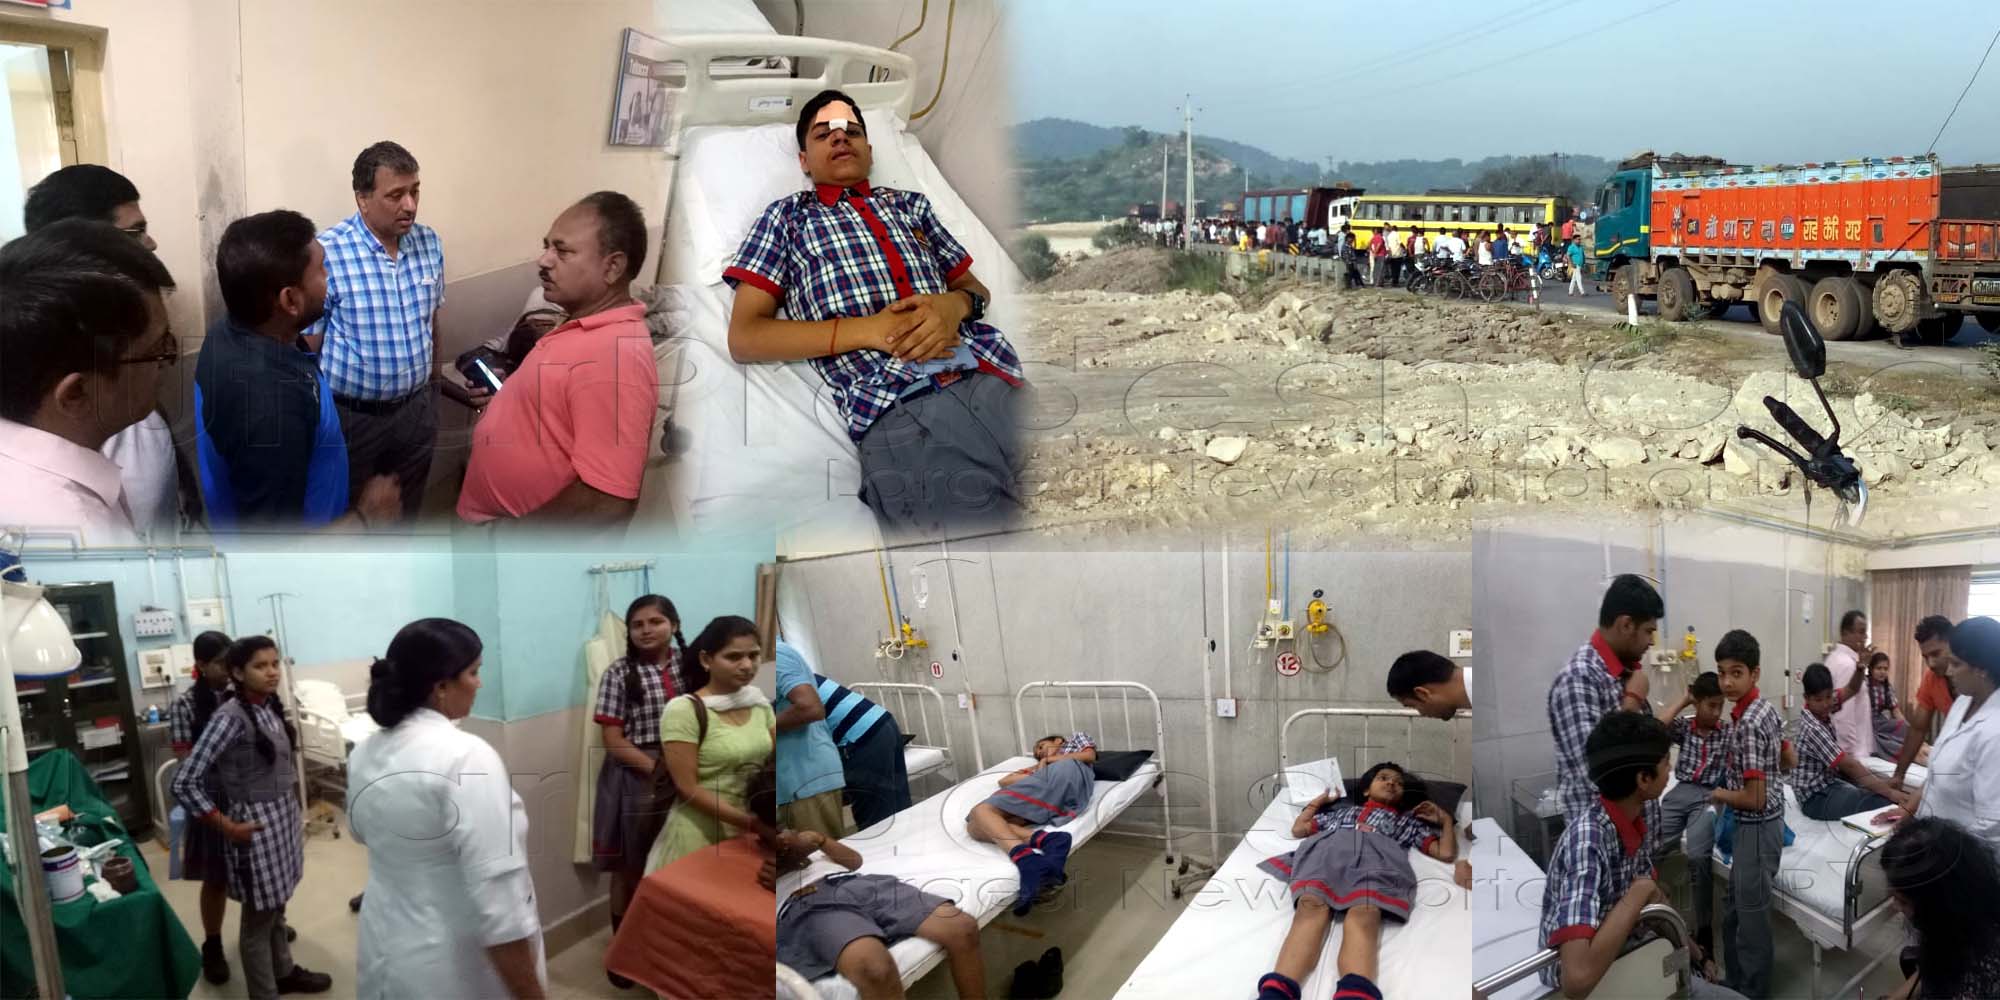 30 Children Injured Central Academy School Bus And Truck Collision